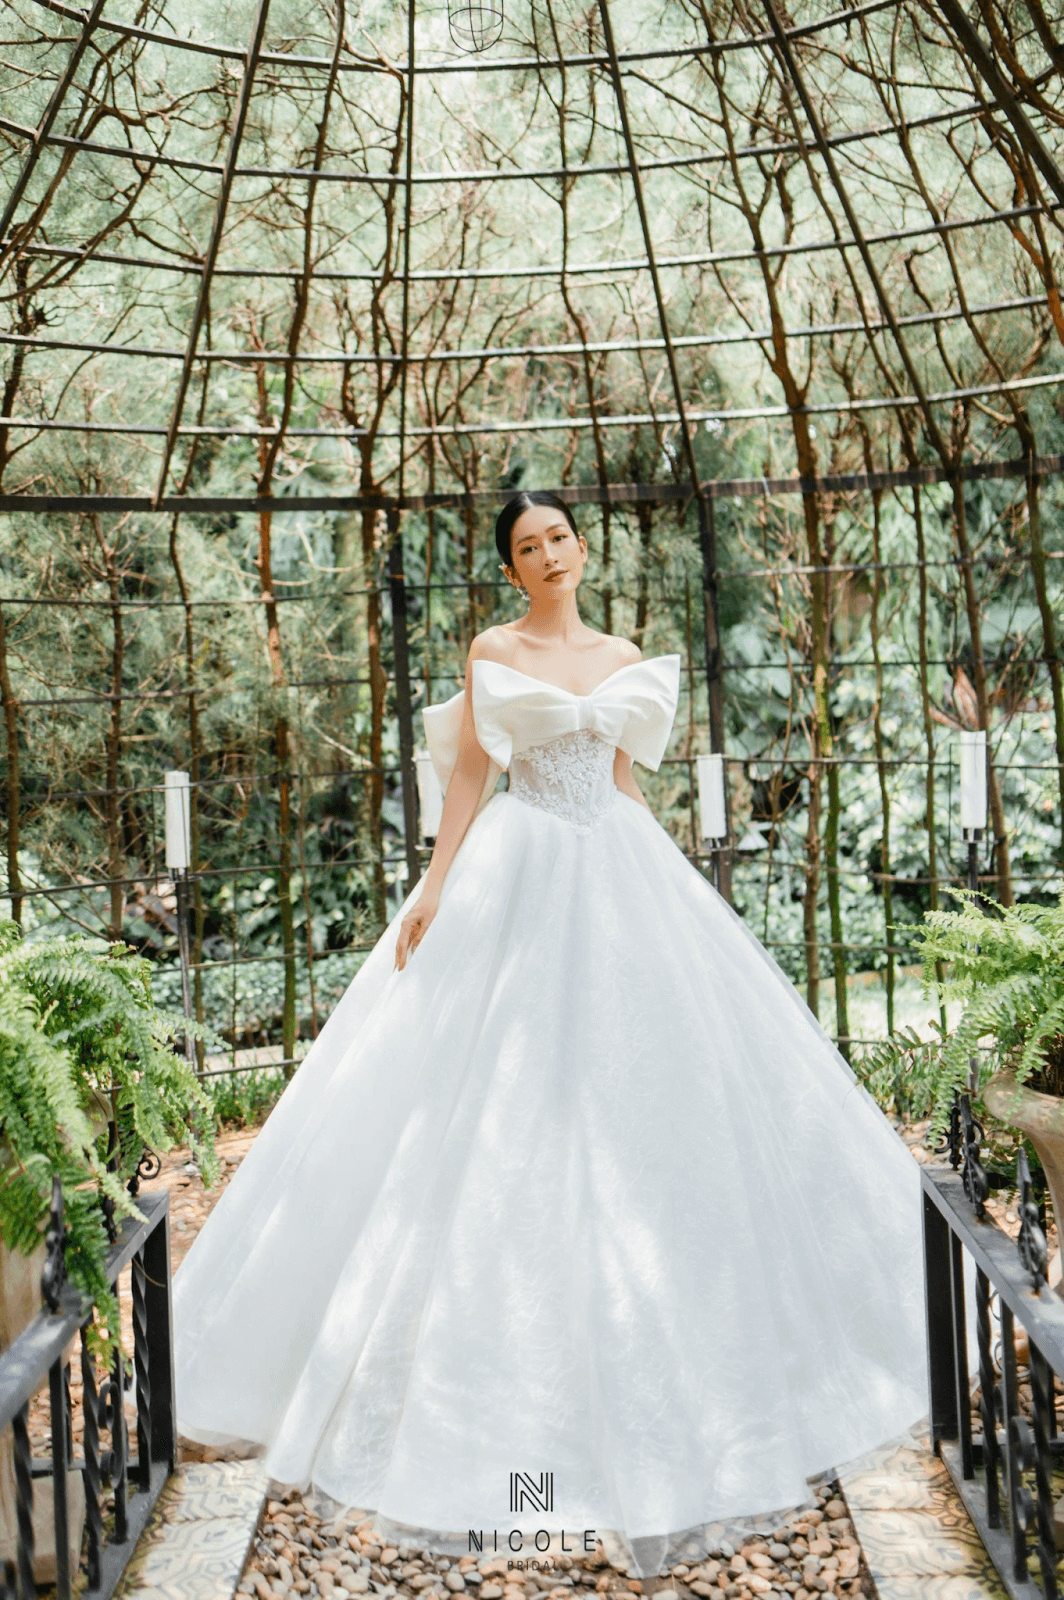 kata meeta photos: World's Most Expensive Wedding Dress | Most expensive  wedding dress, Expensive wedding dress, Most expensive dress